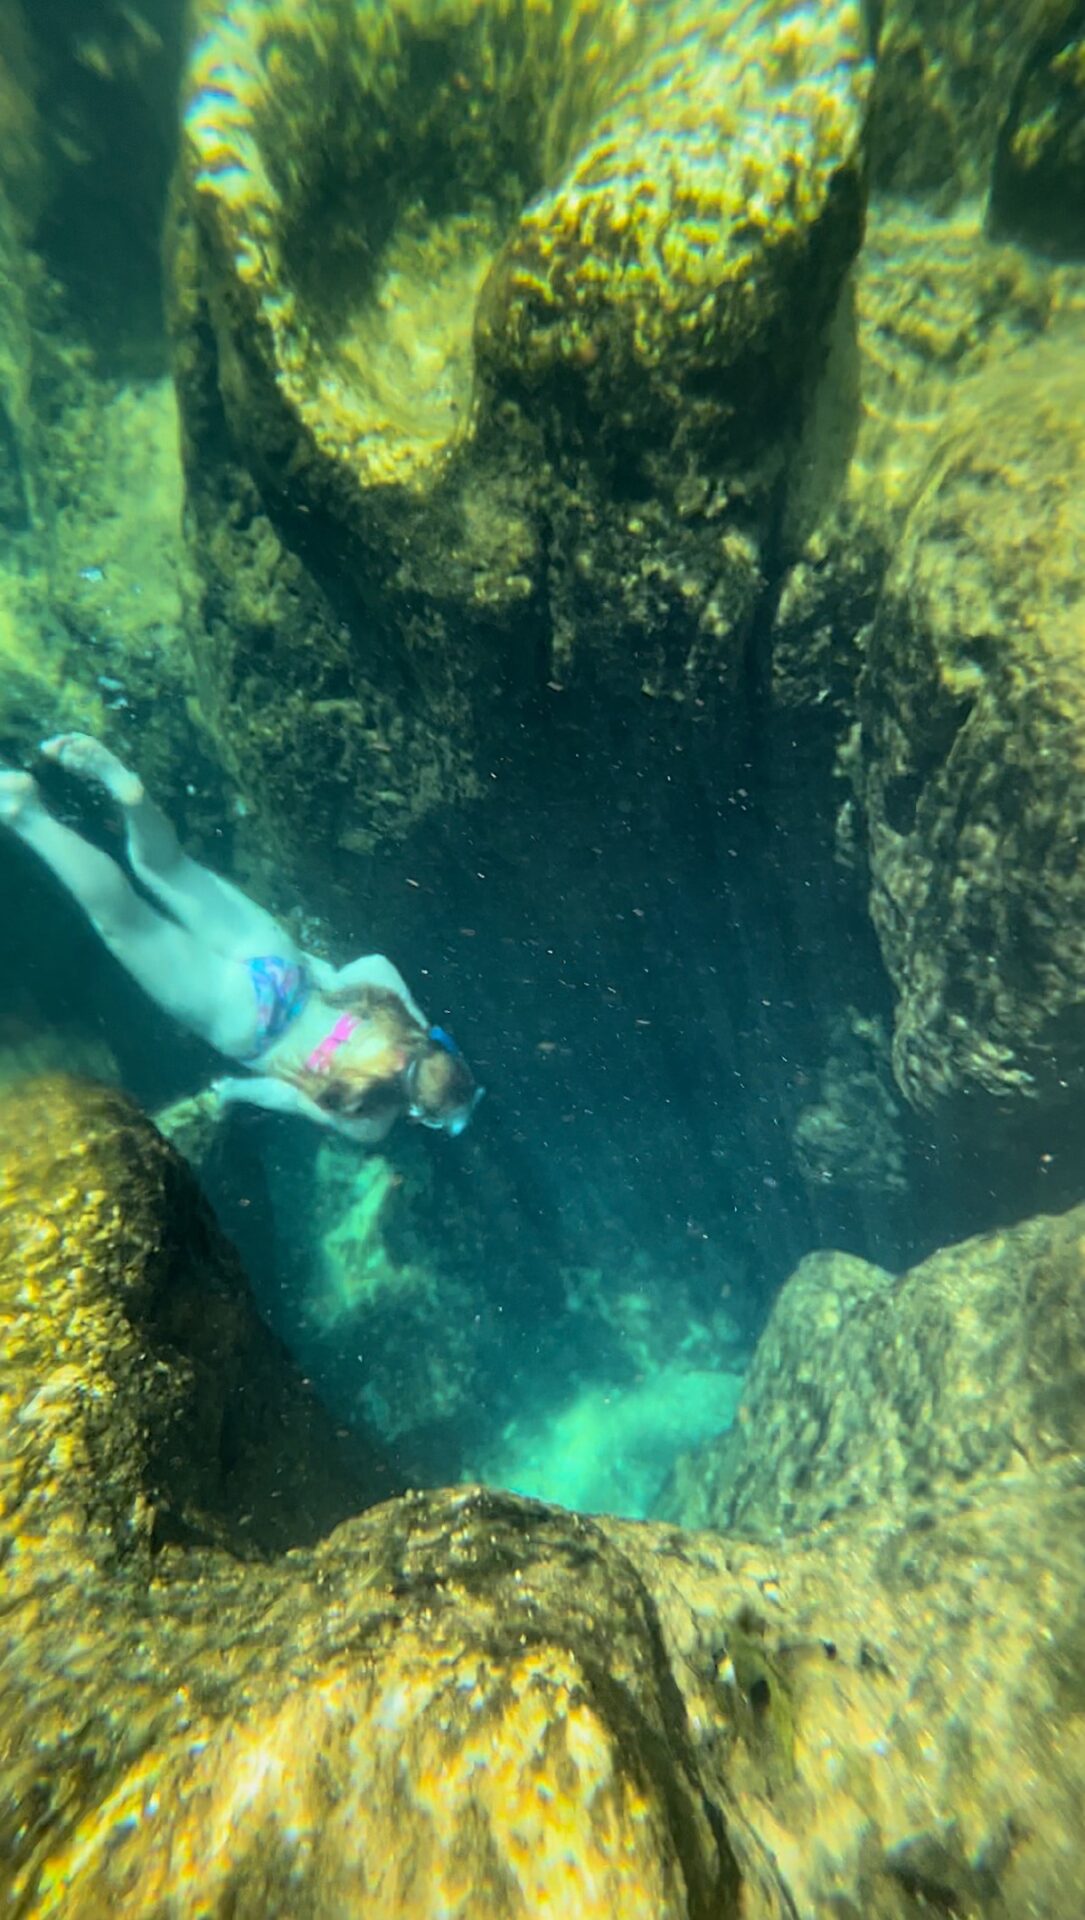 Diving deep into Salt Springs Recreation Area